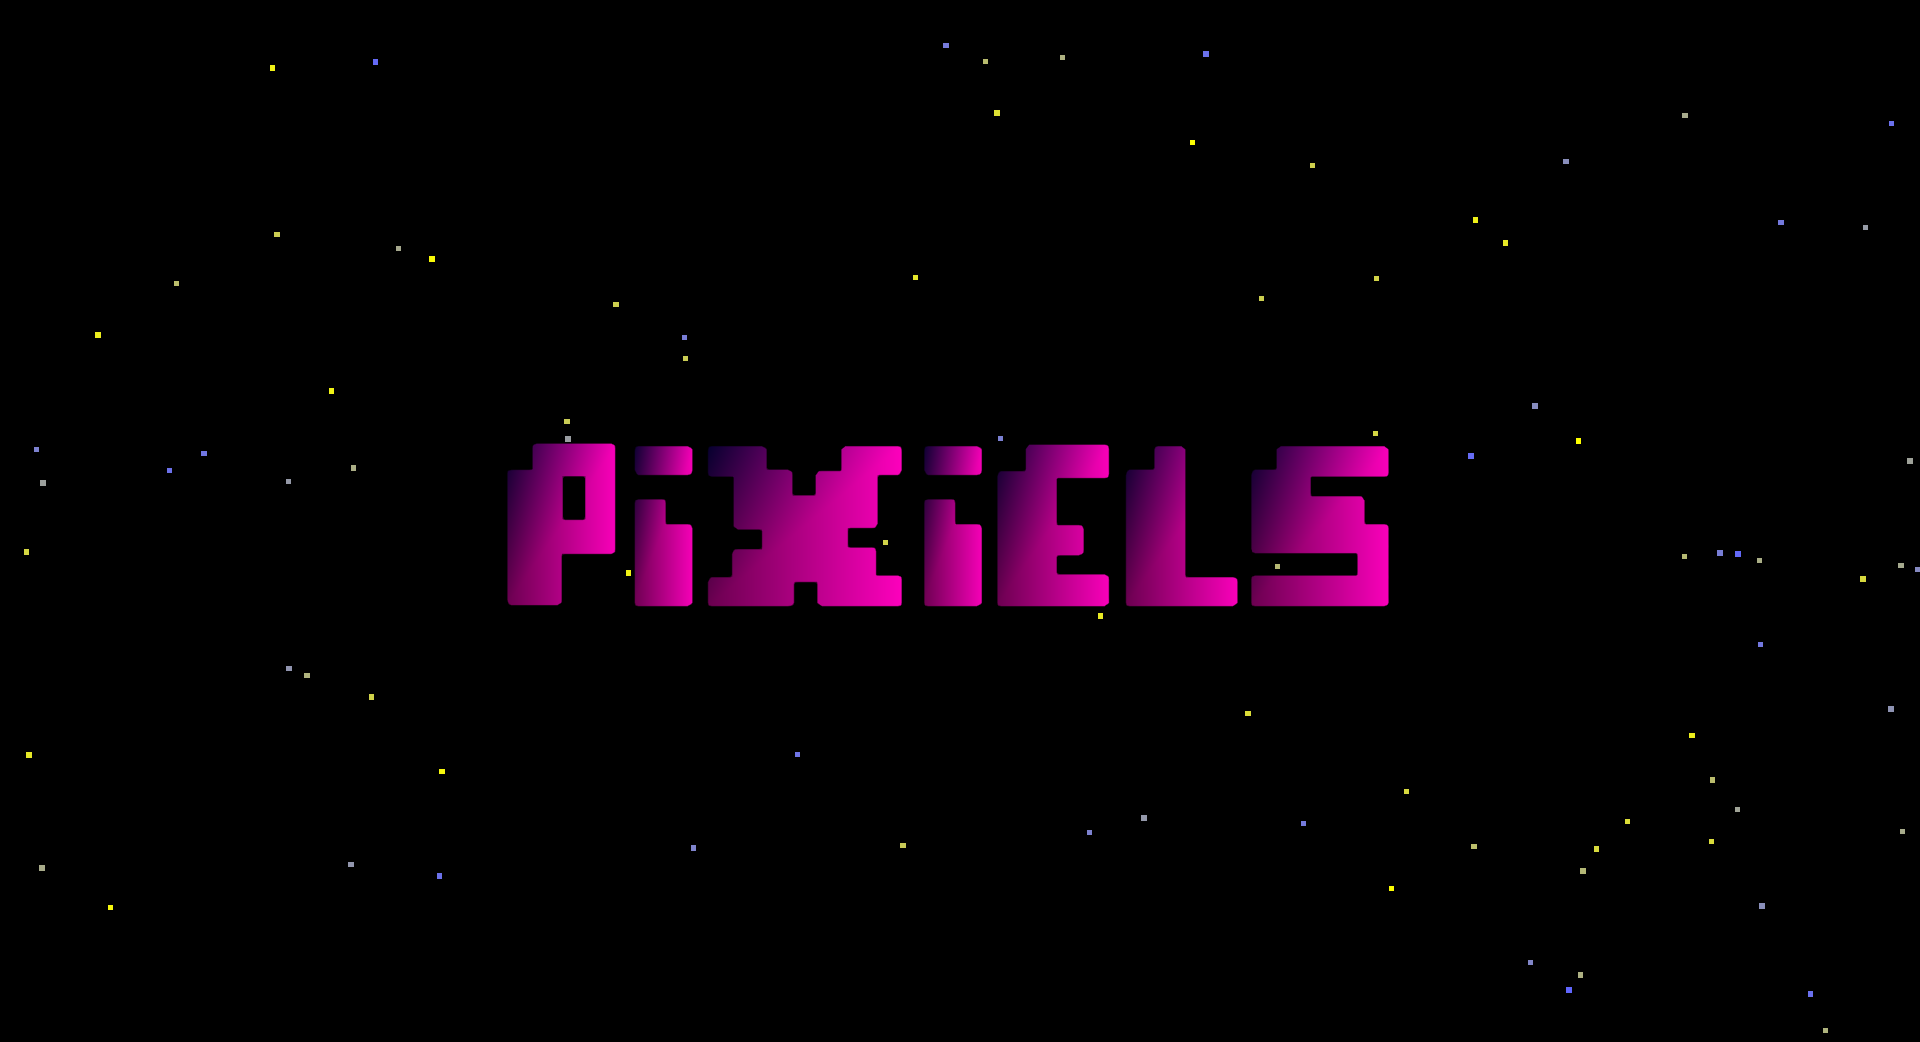 Pixiels